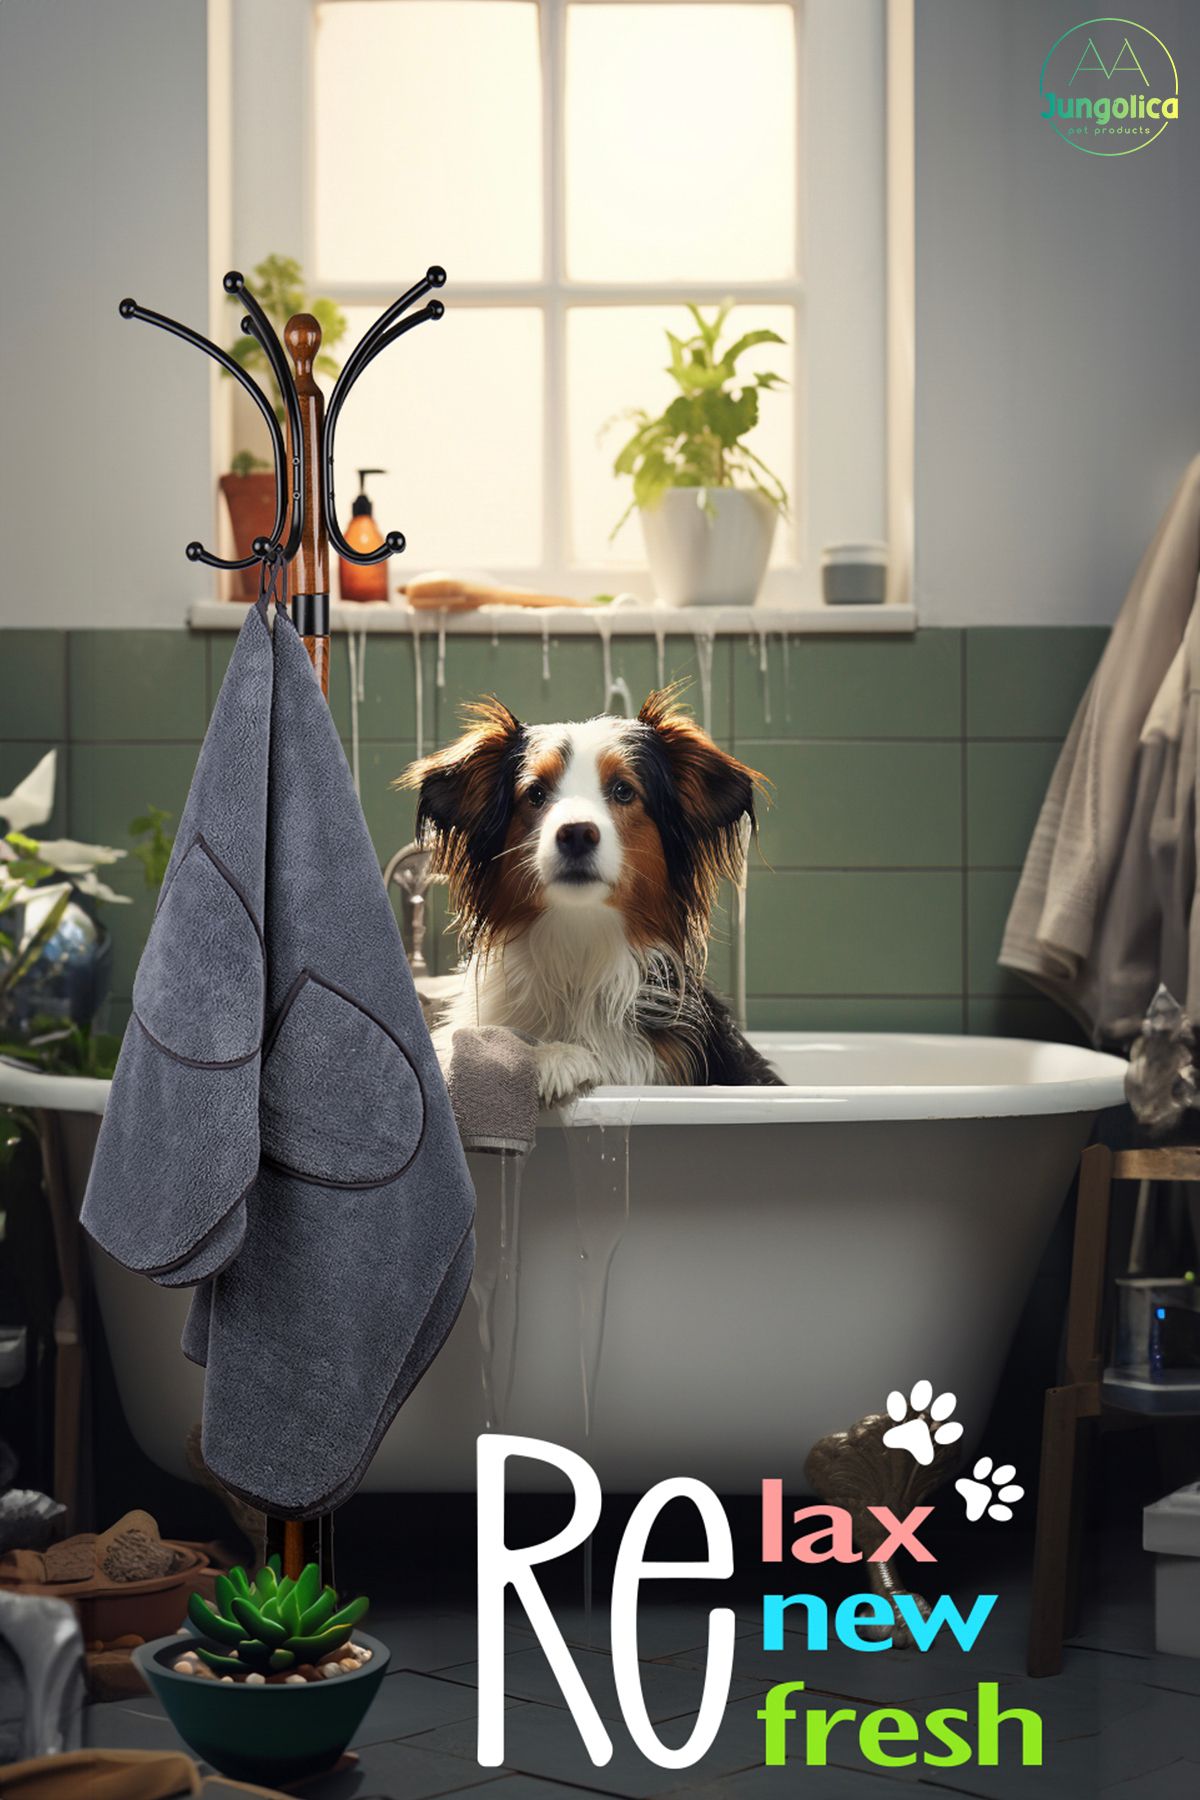 Jungolica Pet Products Relax, Süper Emici, Ultra Yumuşak Kedi ve Köpek Banyo Havlusu